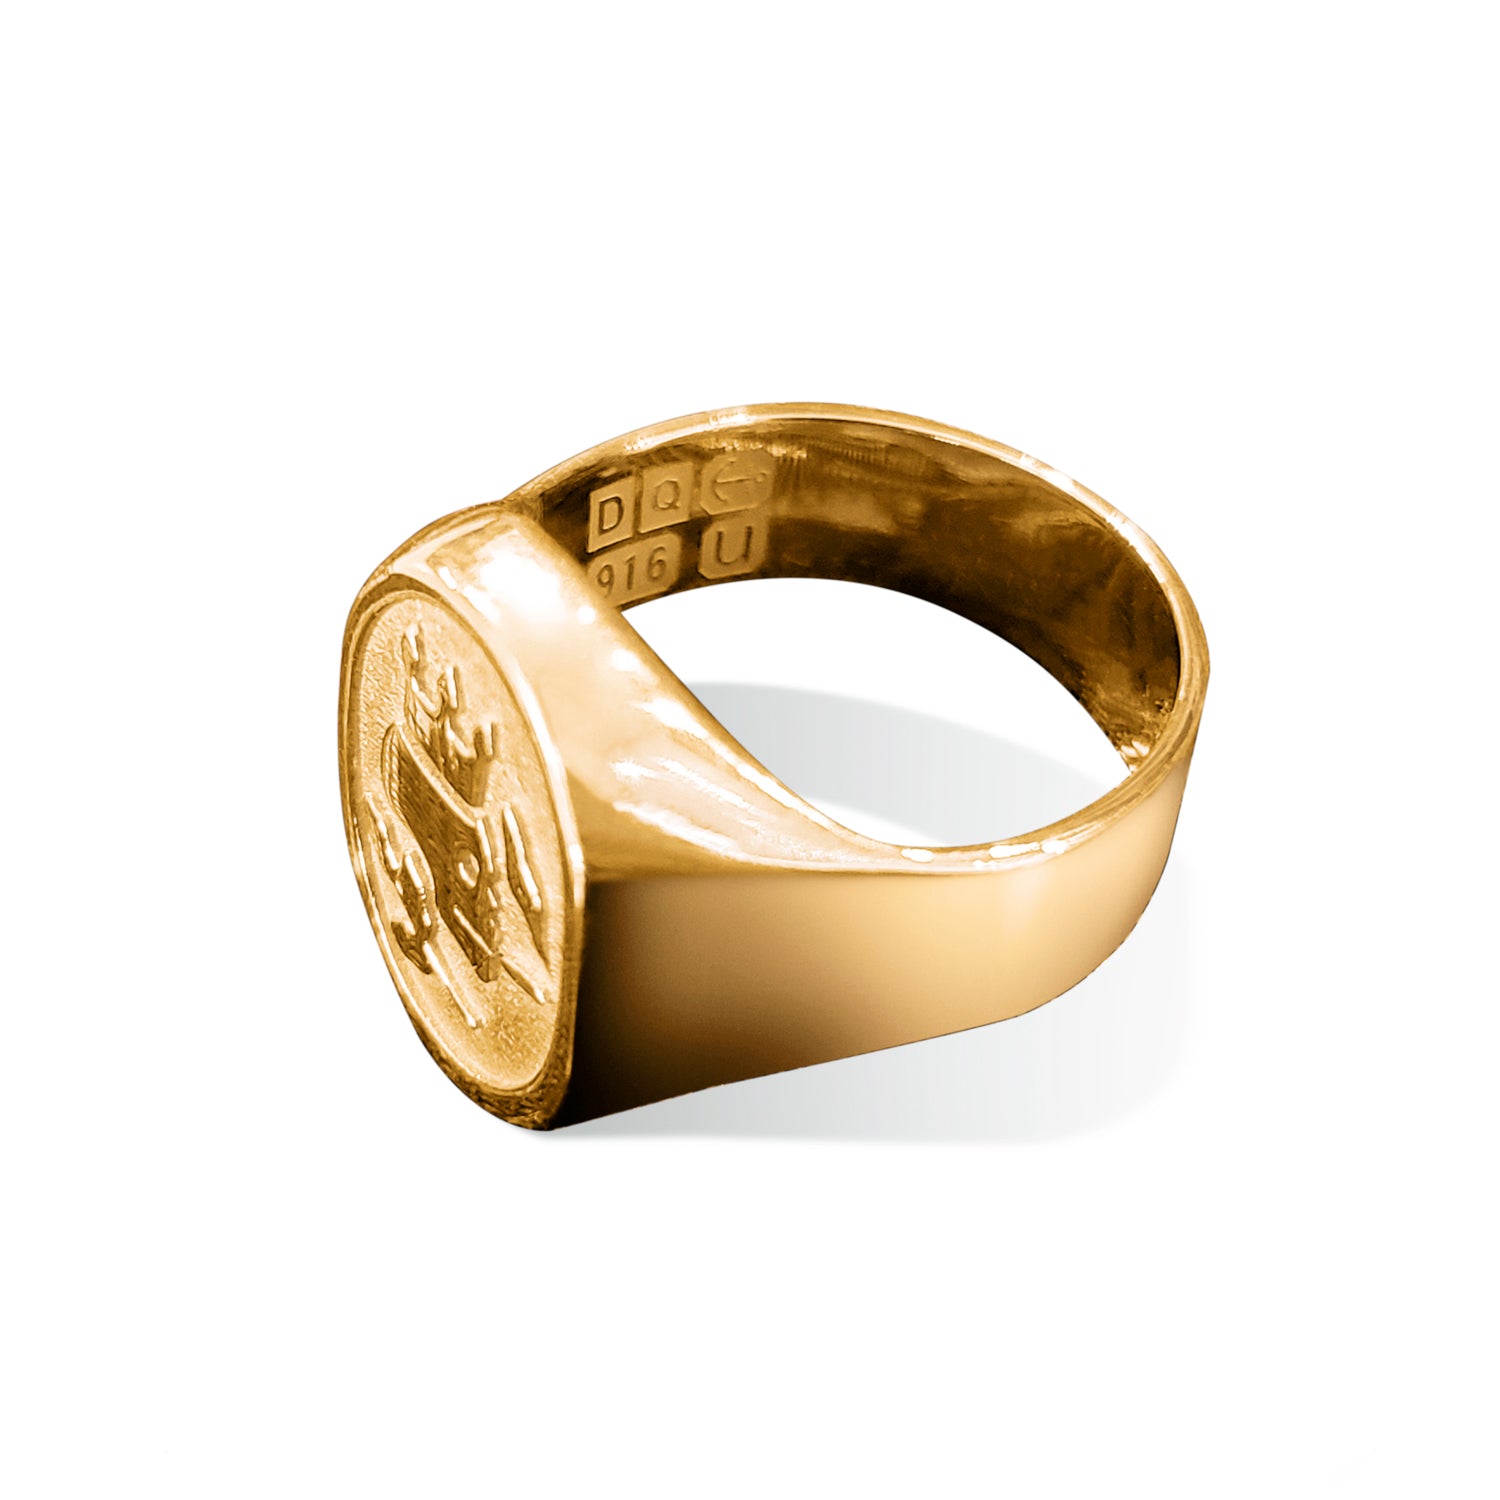 The Smoking Skull Signet Ring 22K Gold